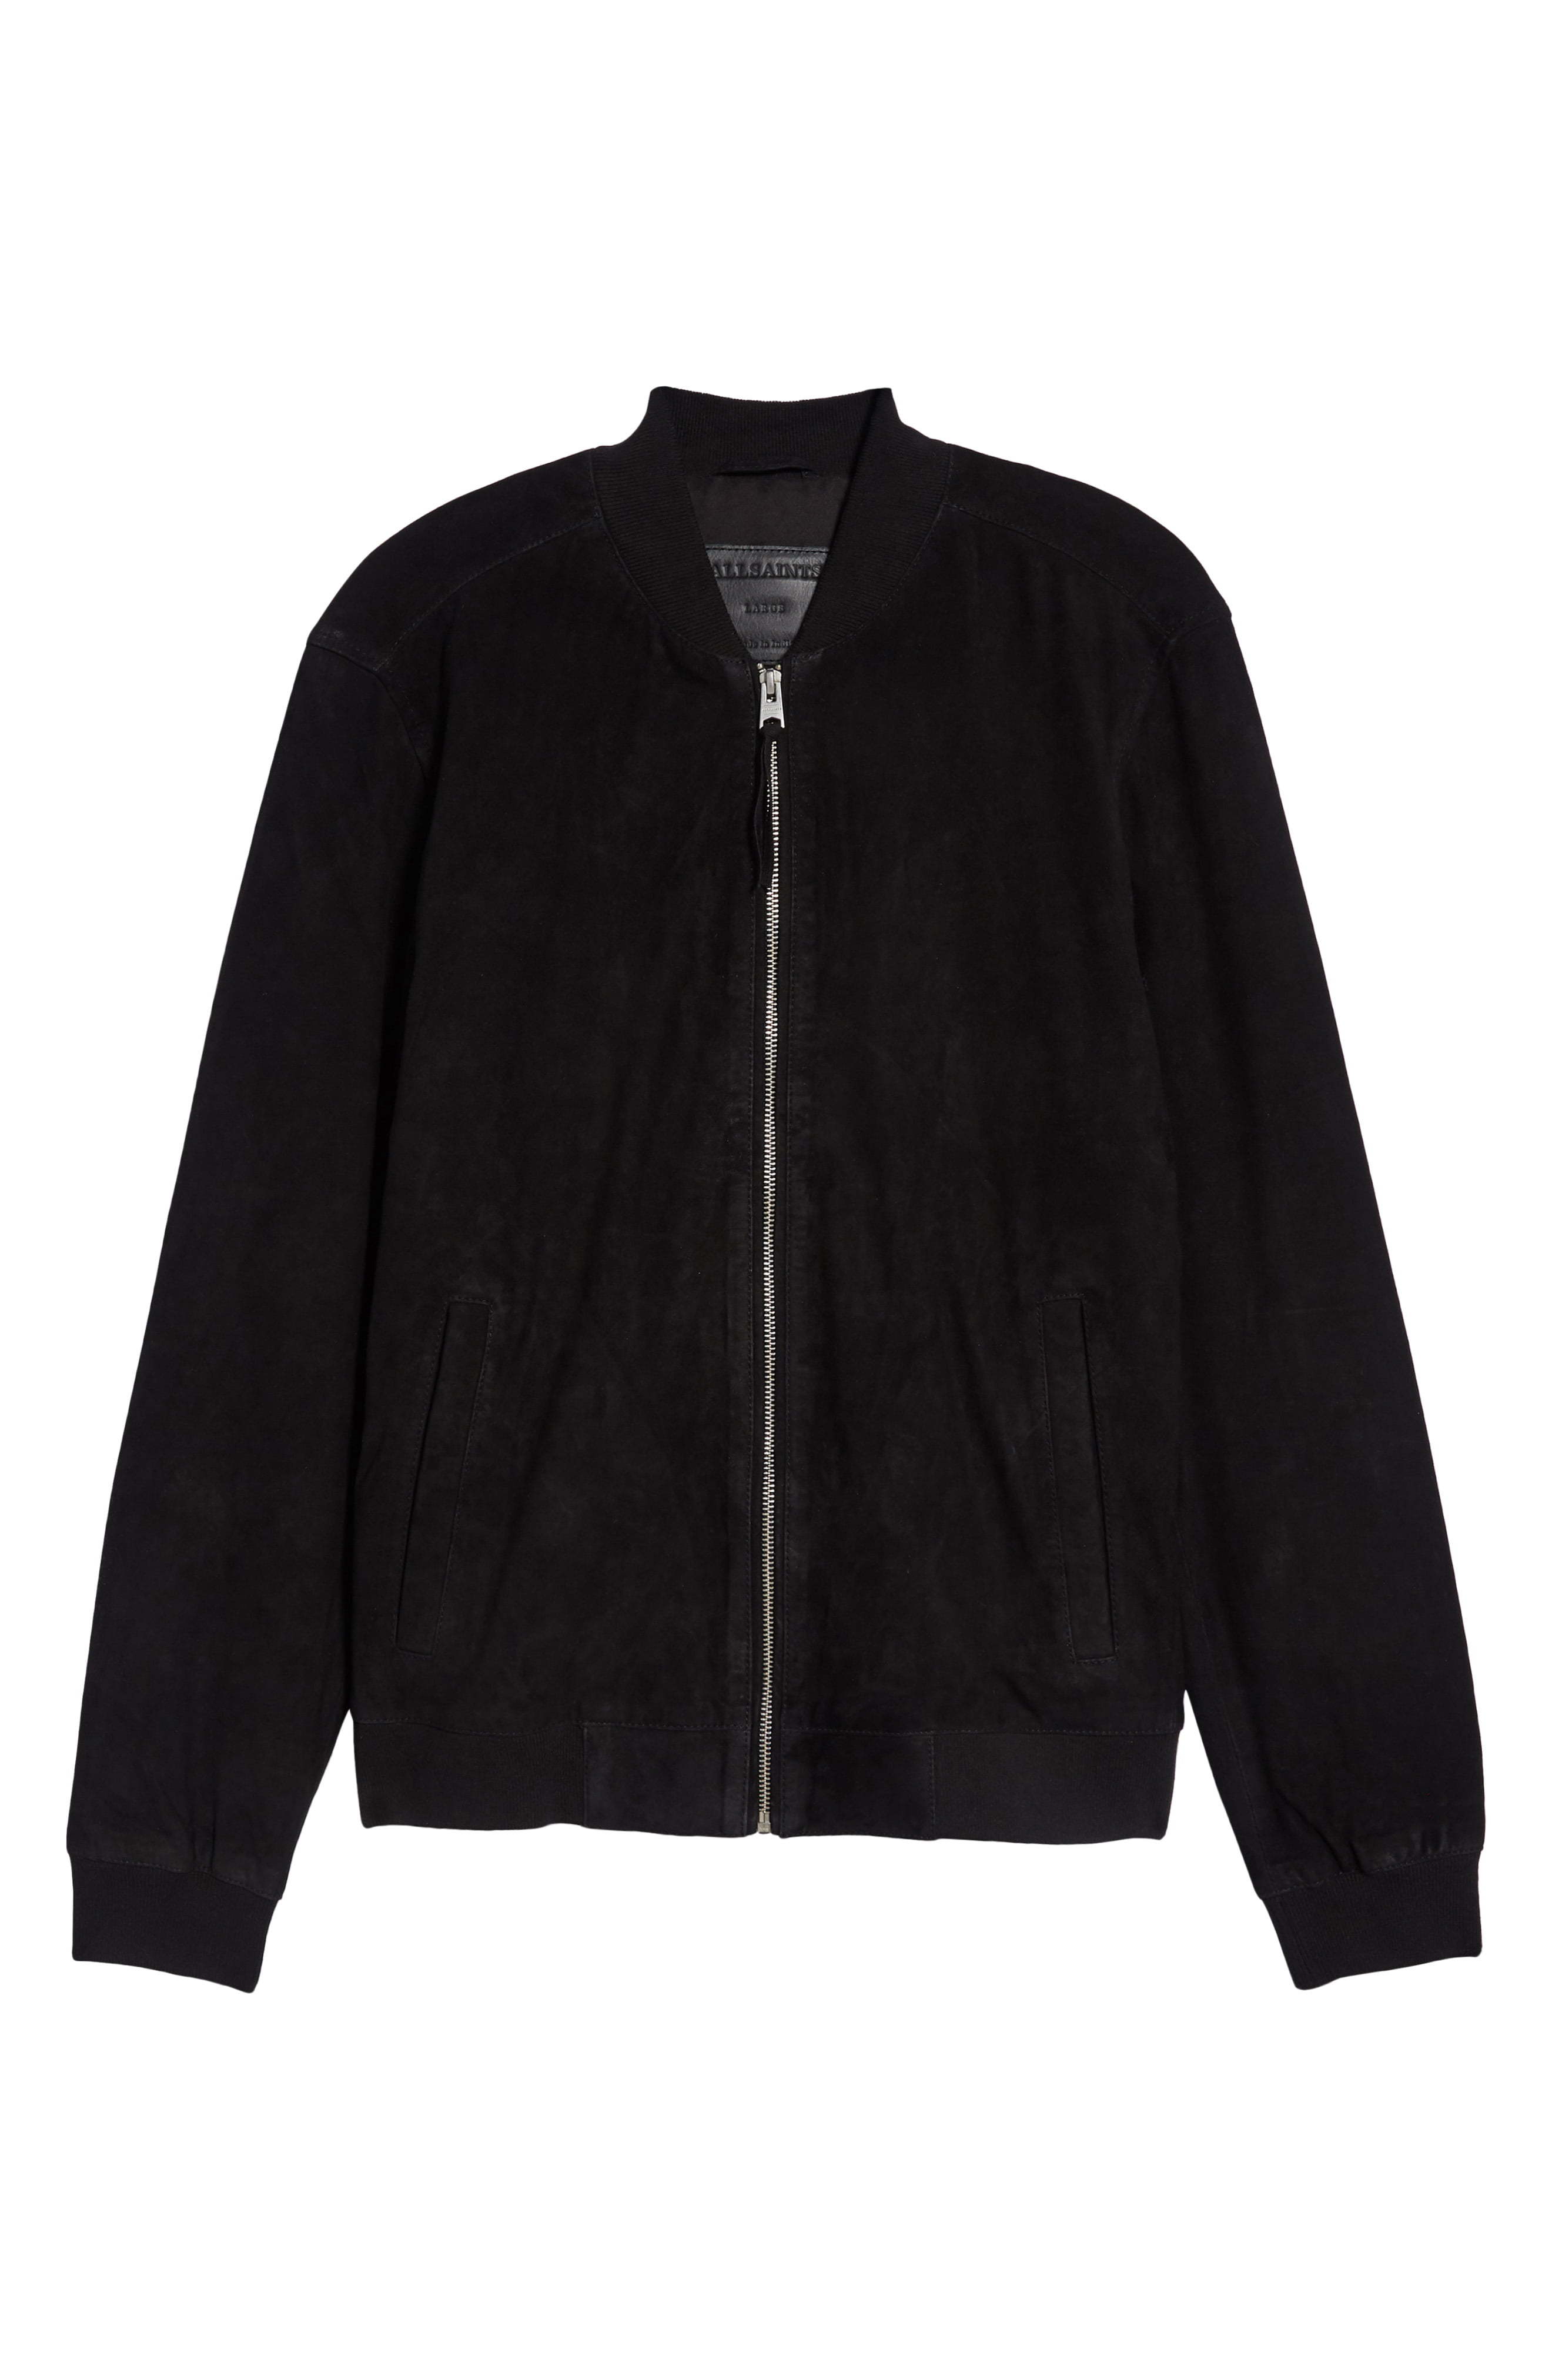 AllSaints Ronan Leather Bomber Jacket, $459 | Nordstrom | Lookastic